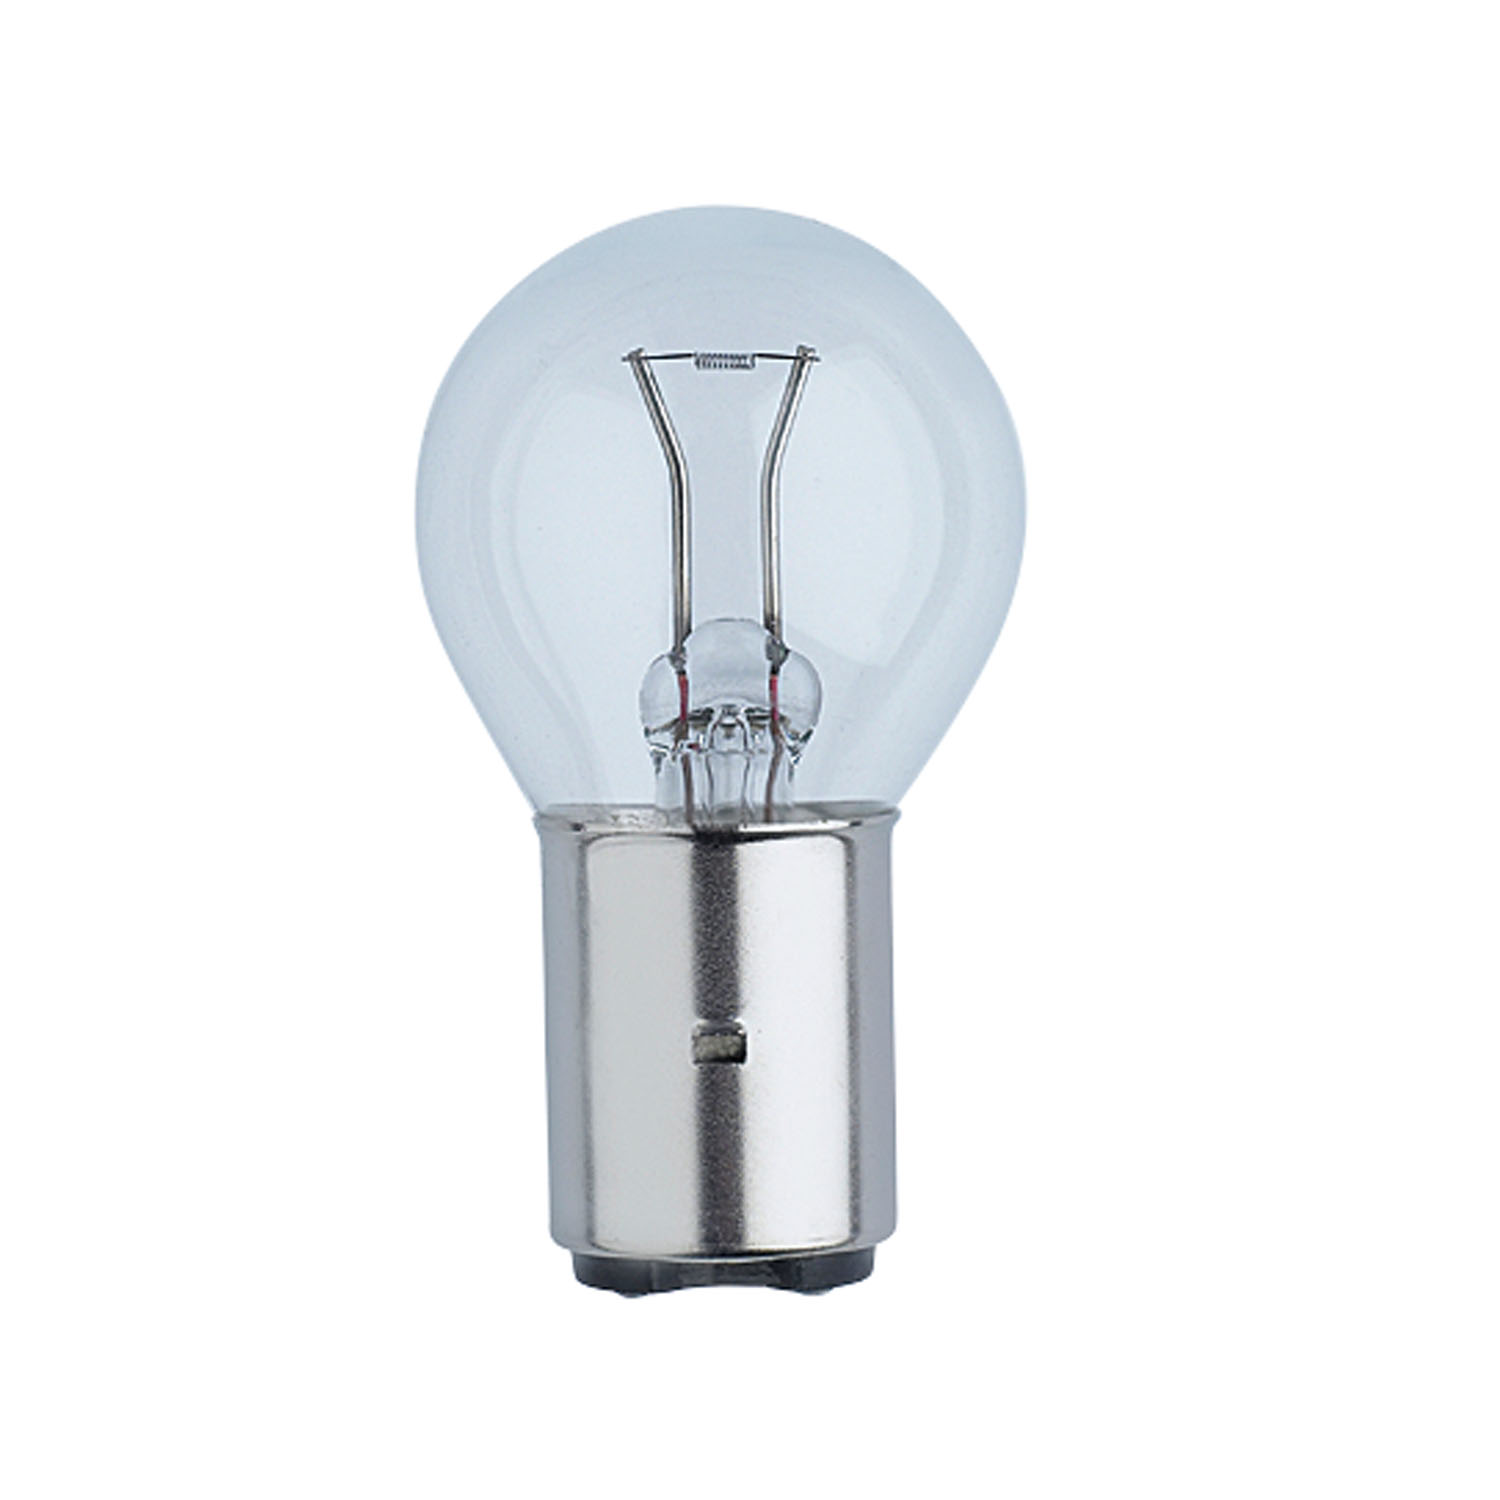 Spezial-Retrofit-Lampe 8022 BA20d 50W 12V Helles weißes Licht, Osram